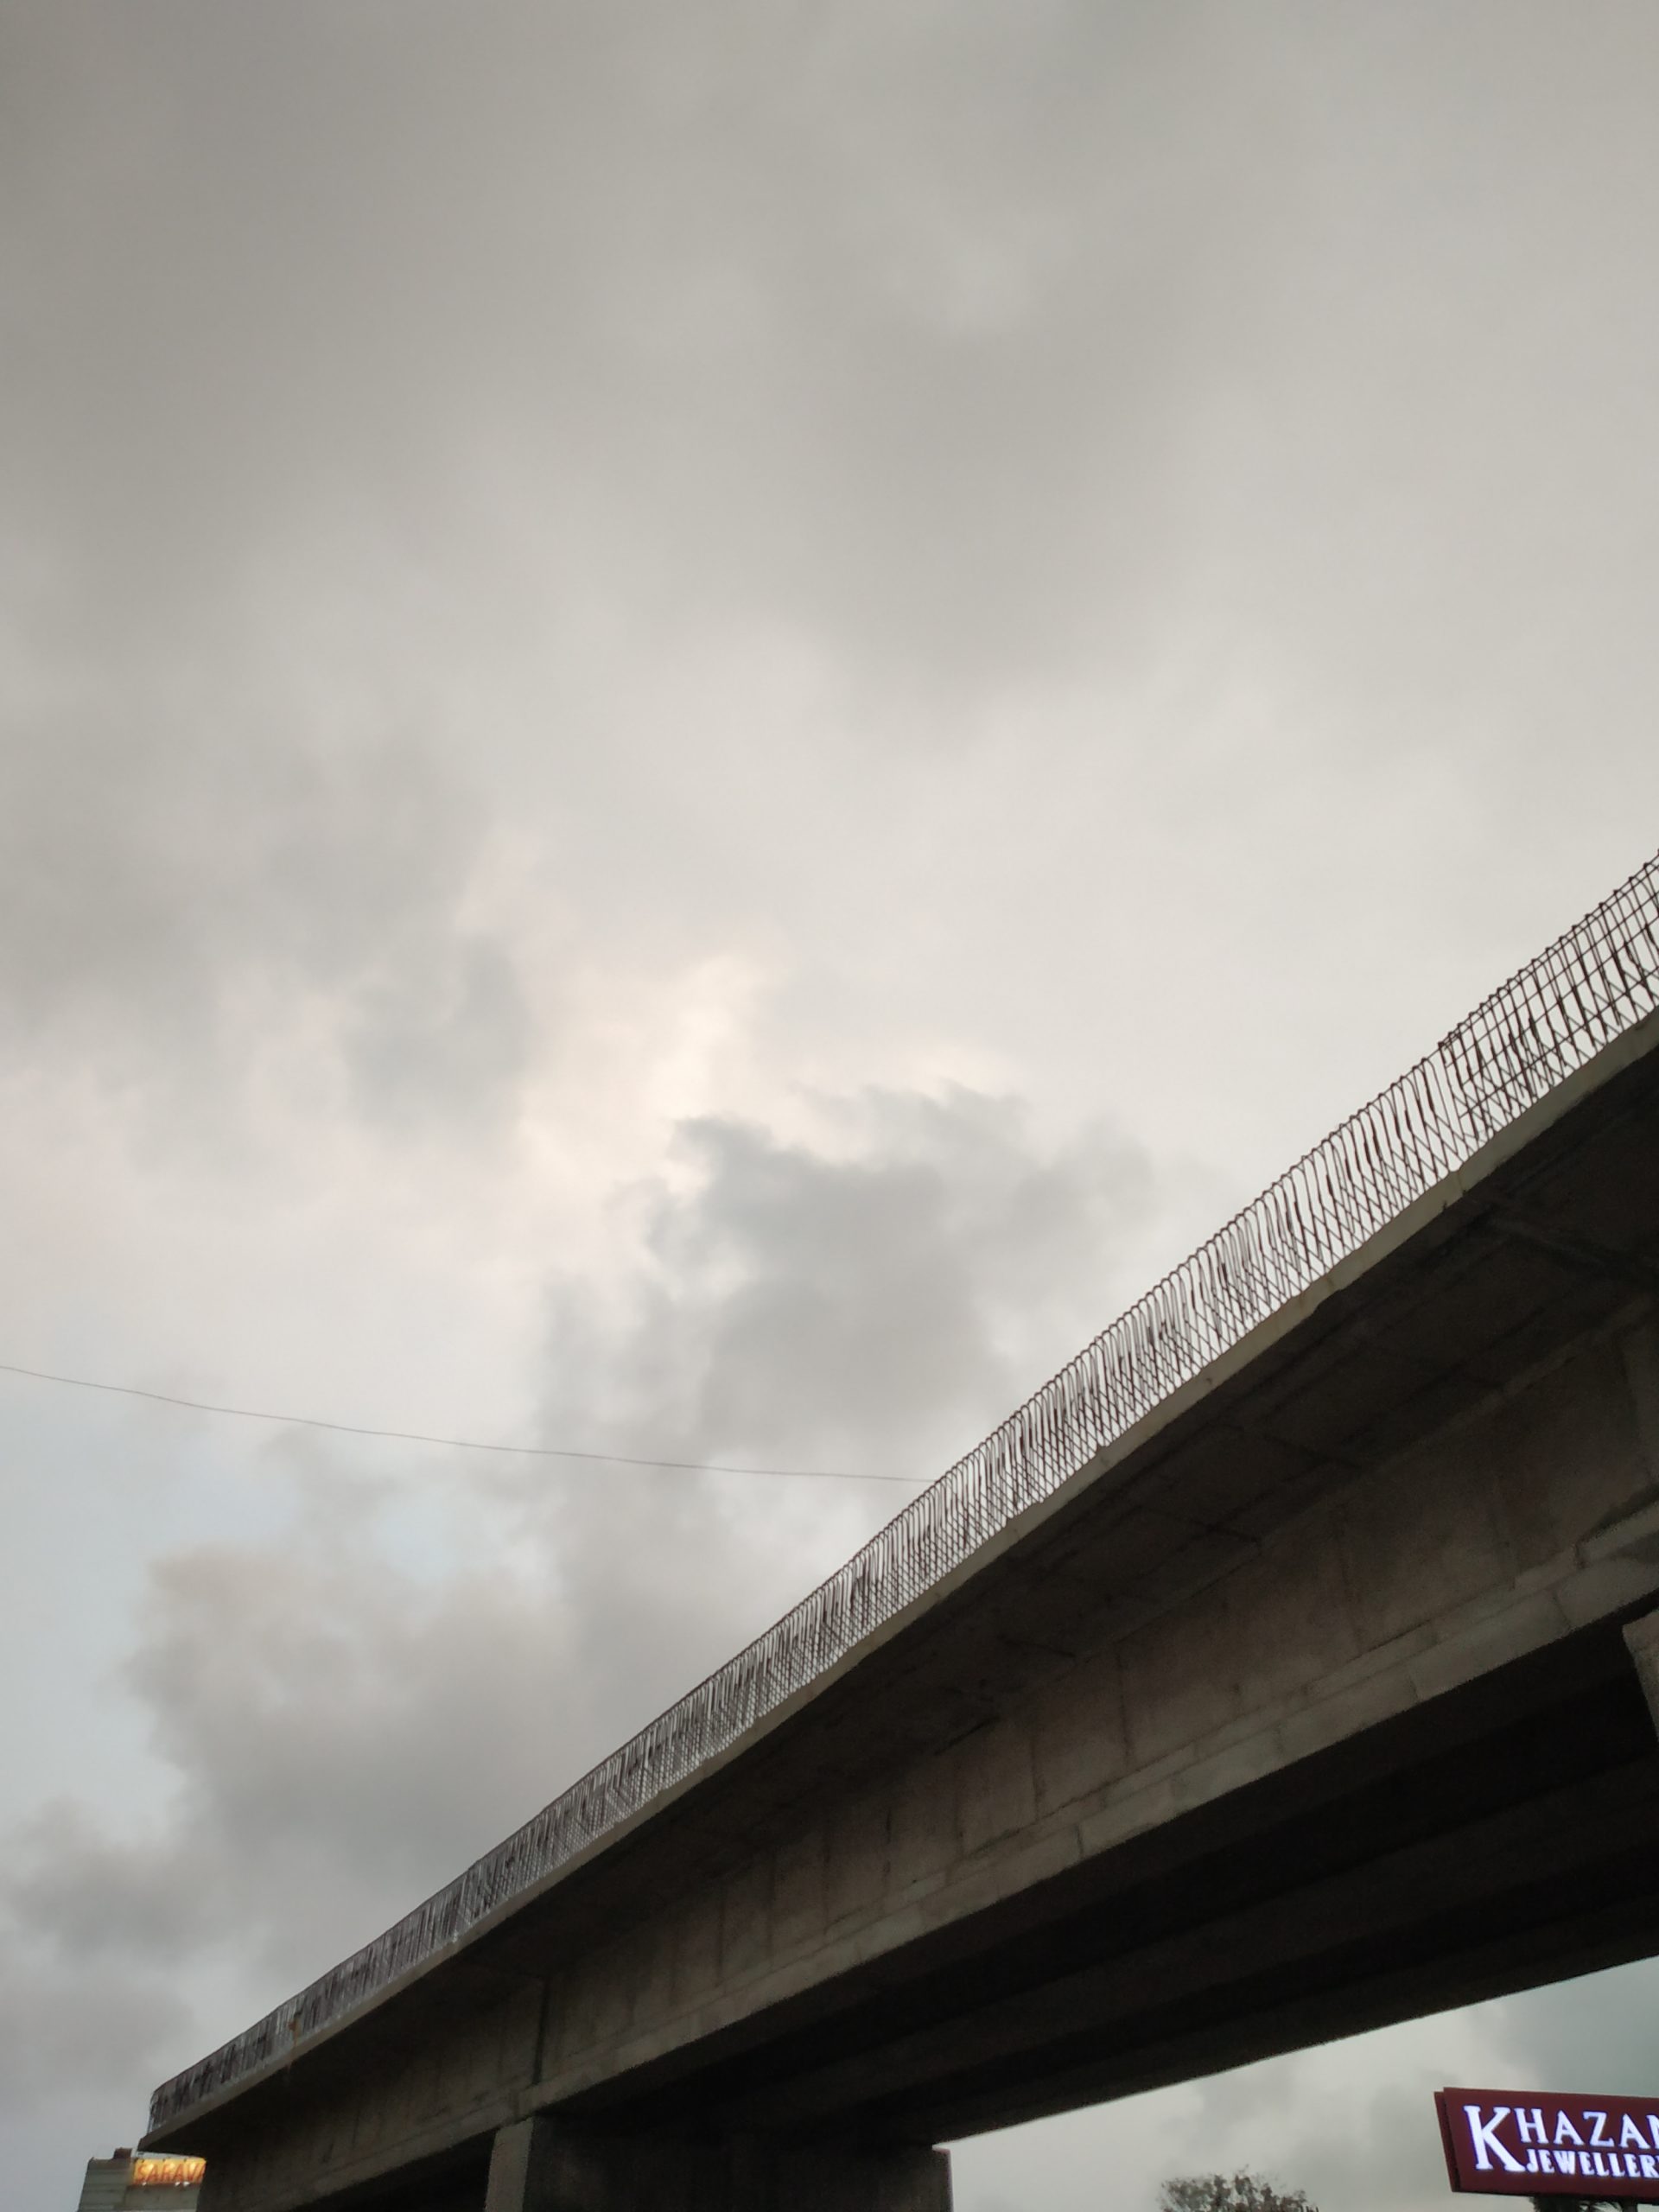 Bridge under the cloudy sky